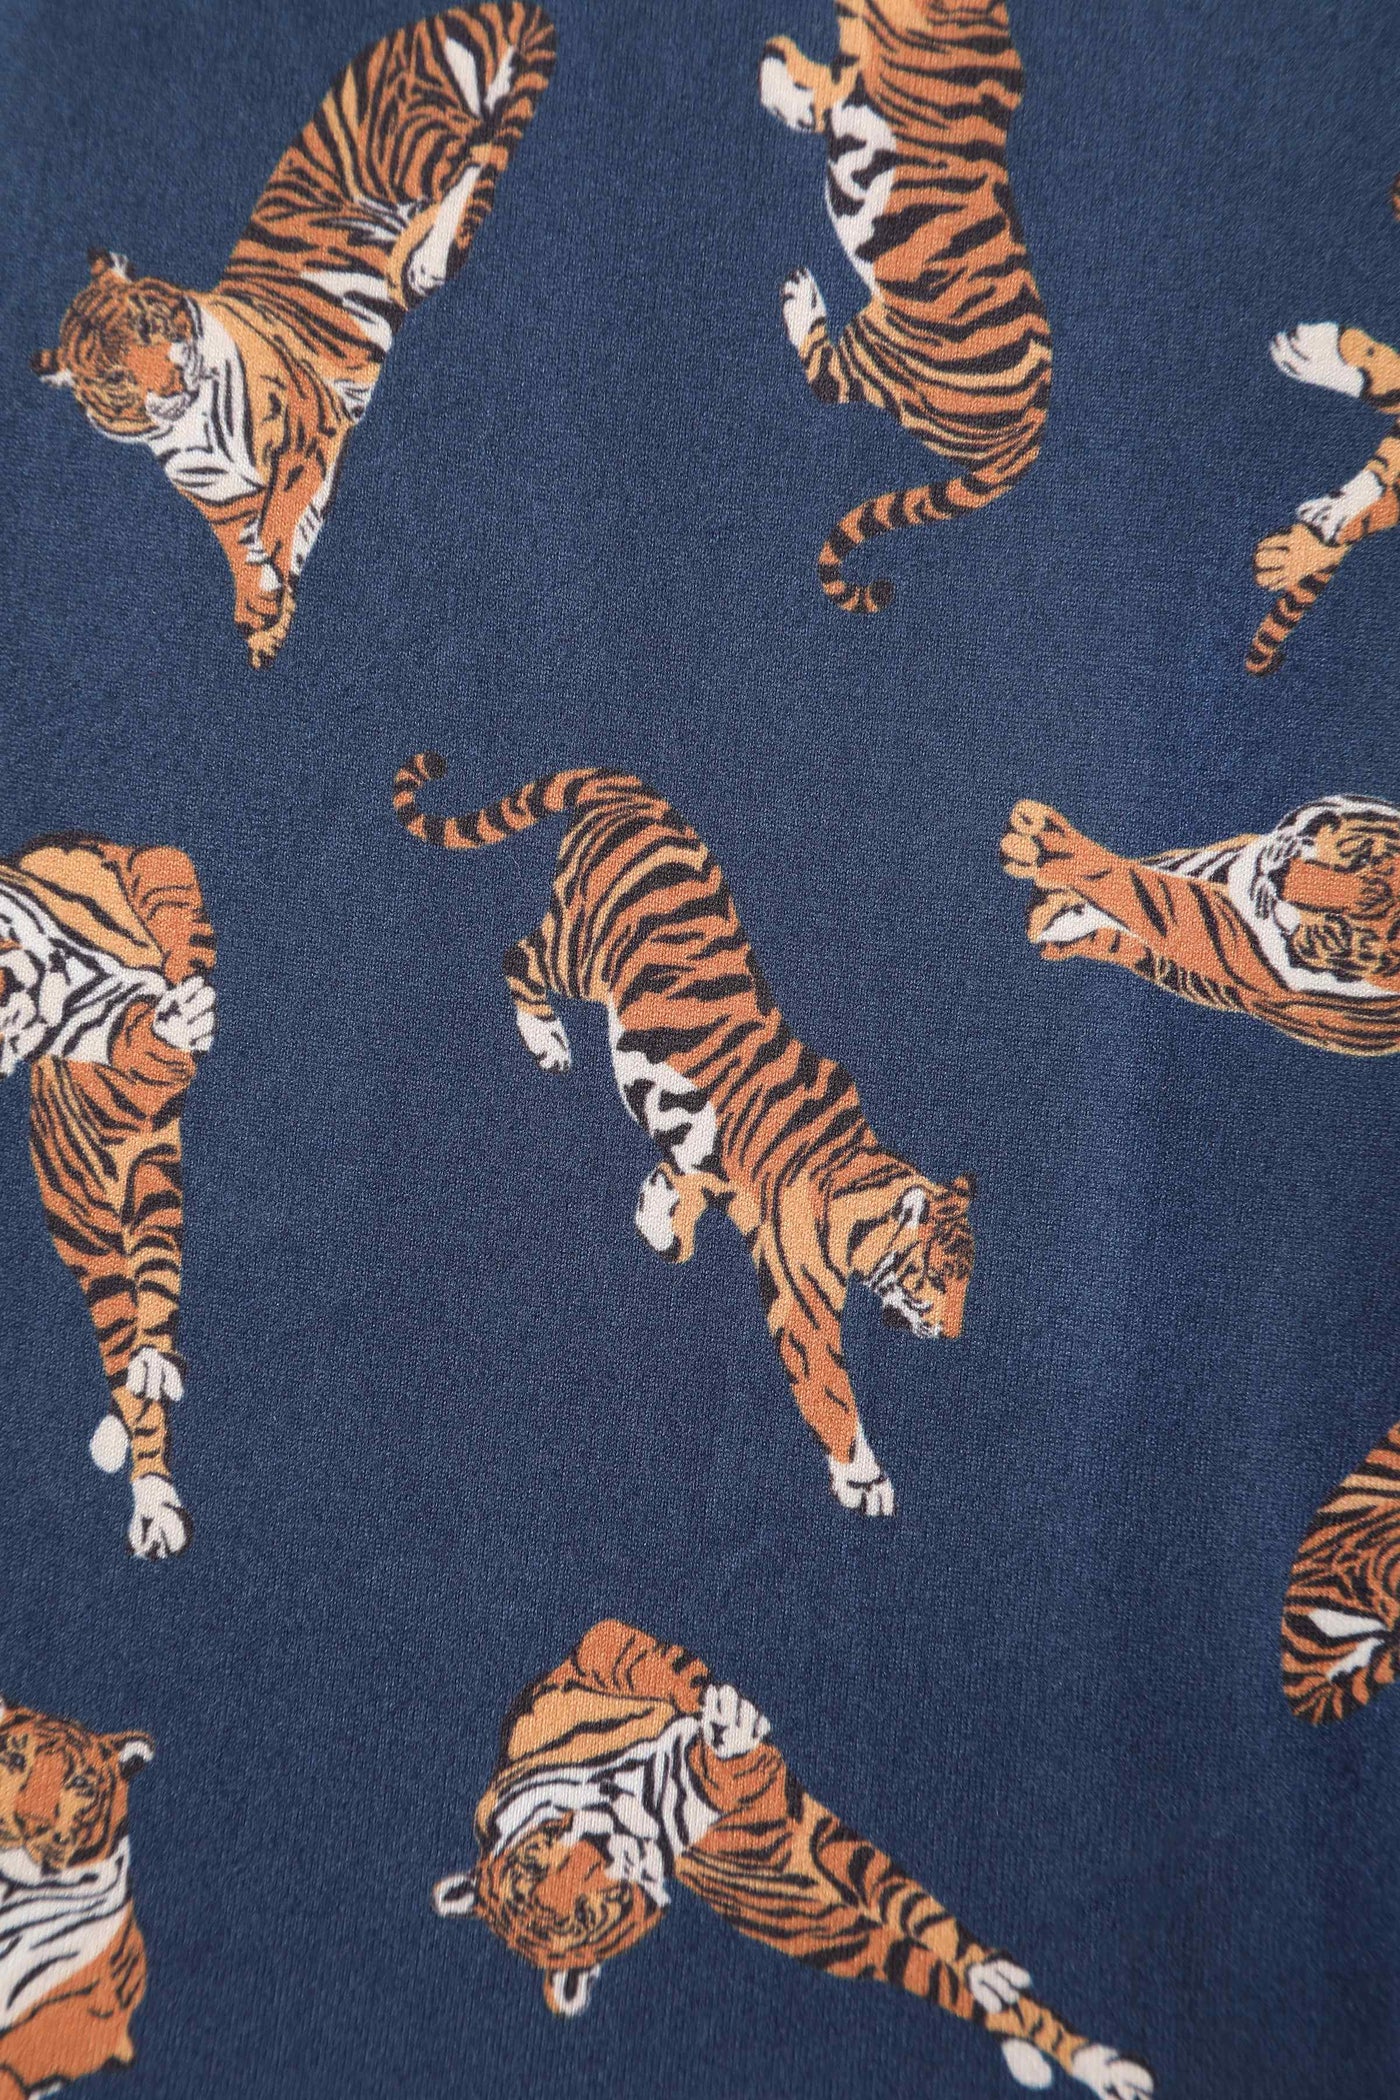 Close up view of Navy Blue Tiger Print Wrap Dress